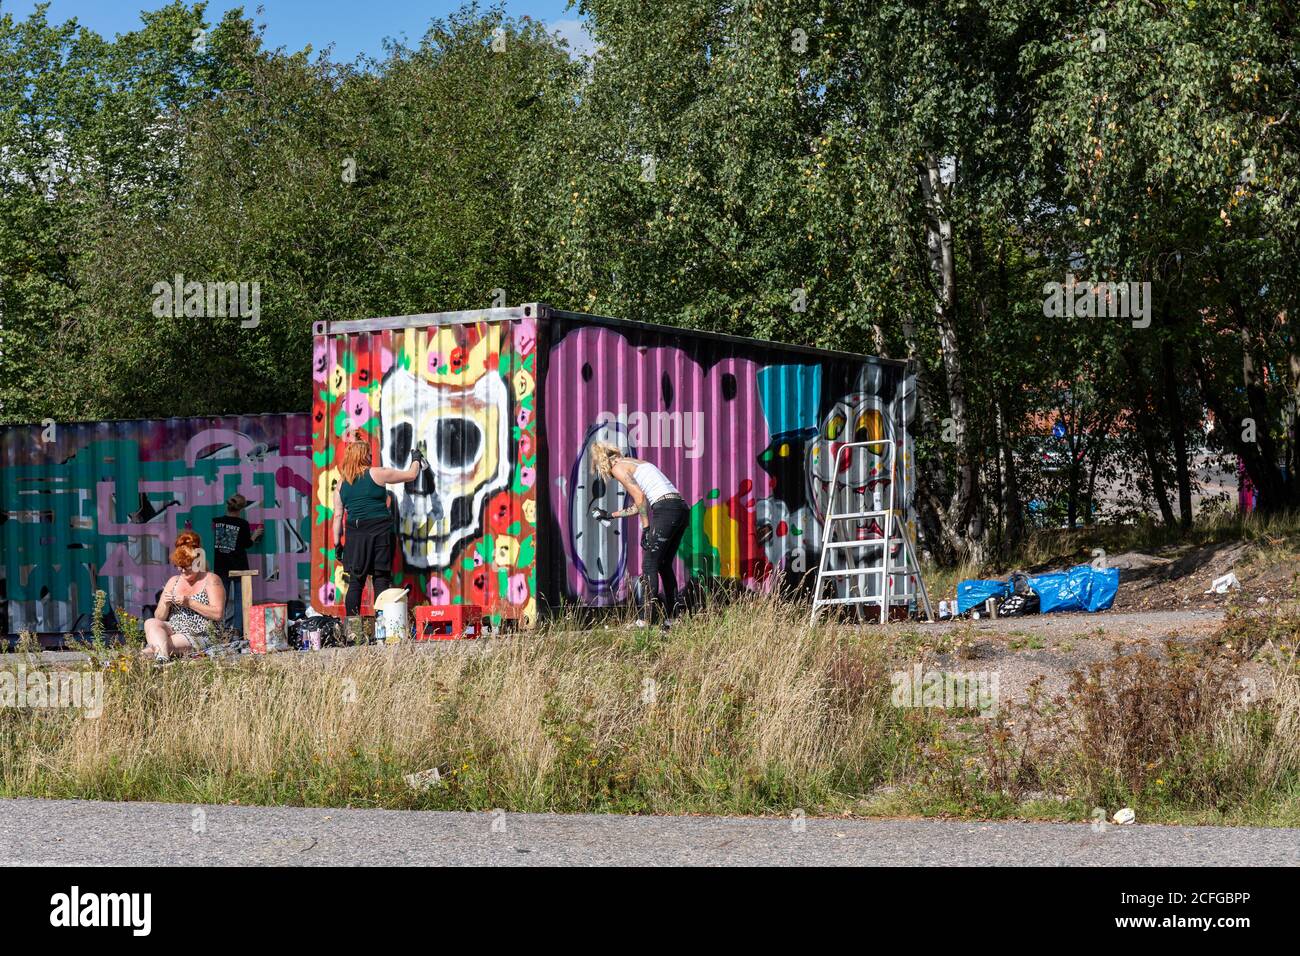 Mimmit peinttaa. Weibliche Graffiti-Künstler-Veranstaltung in Suvilahti Wasteland in Helsinki, Finnland. Stockfoto